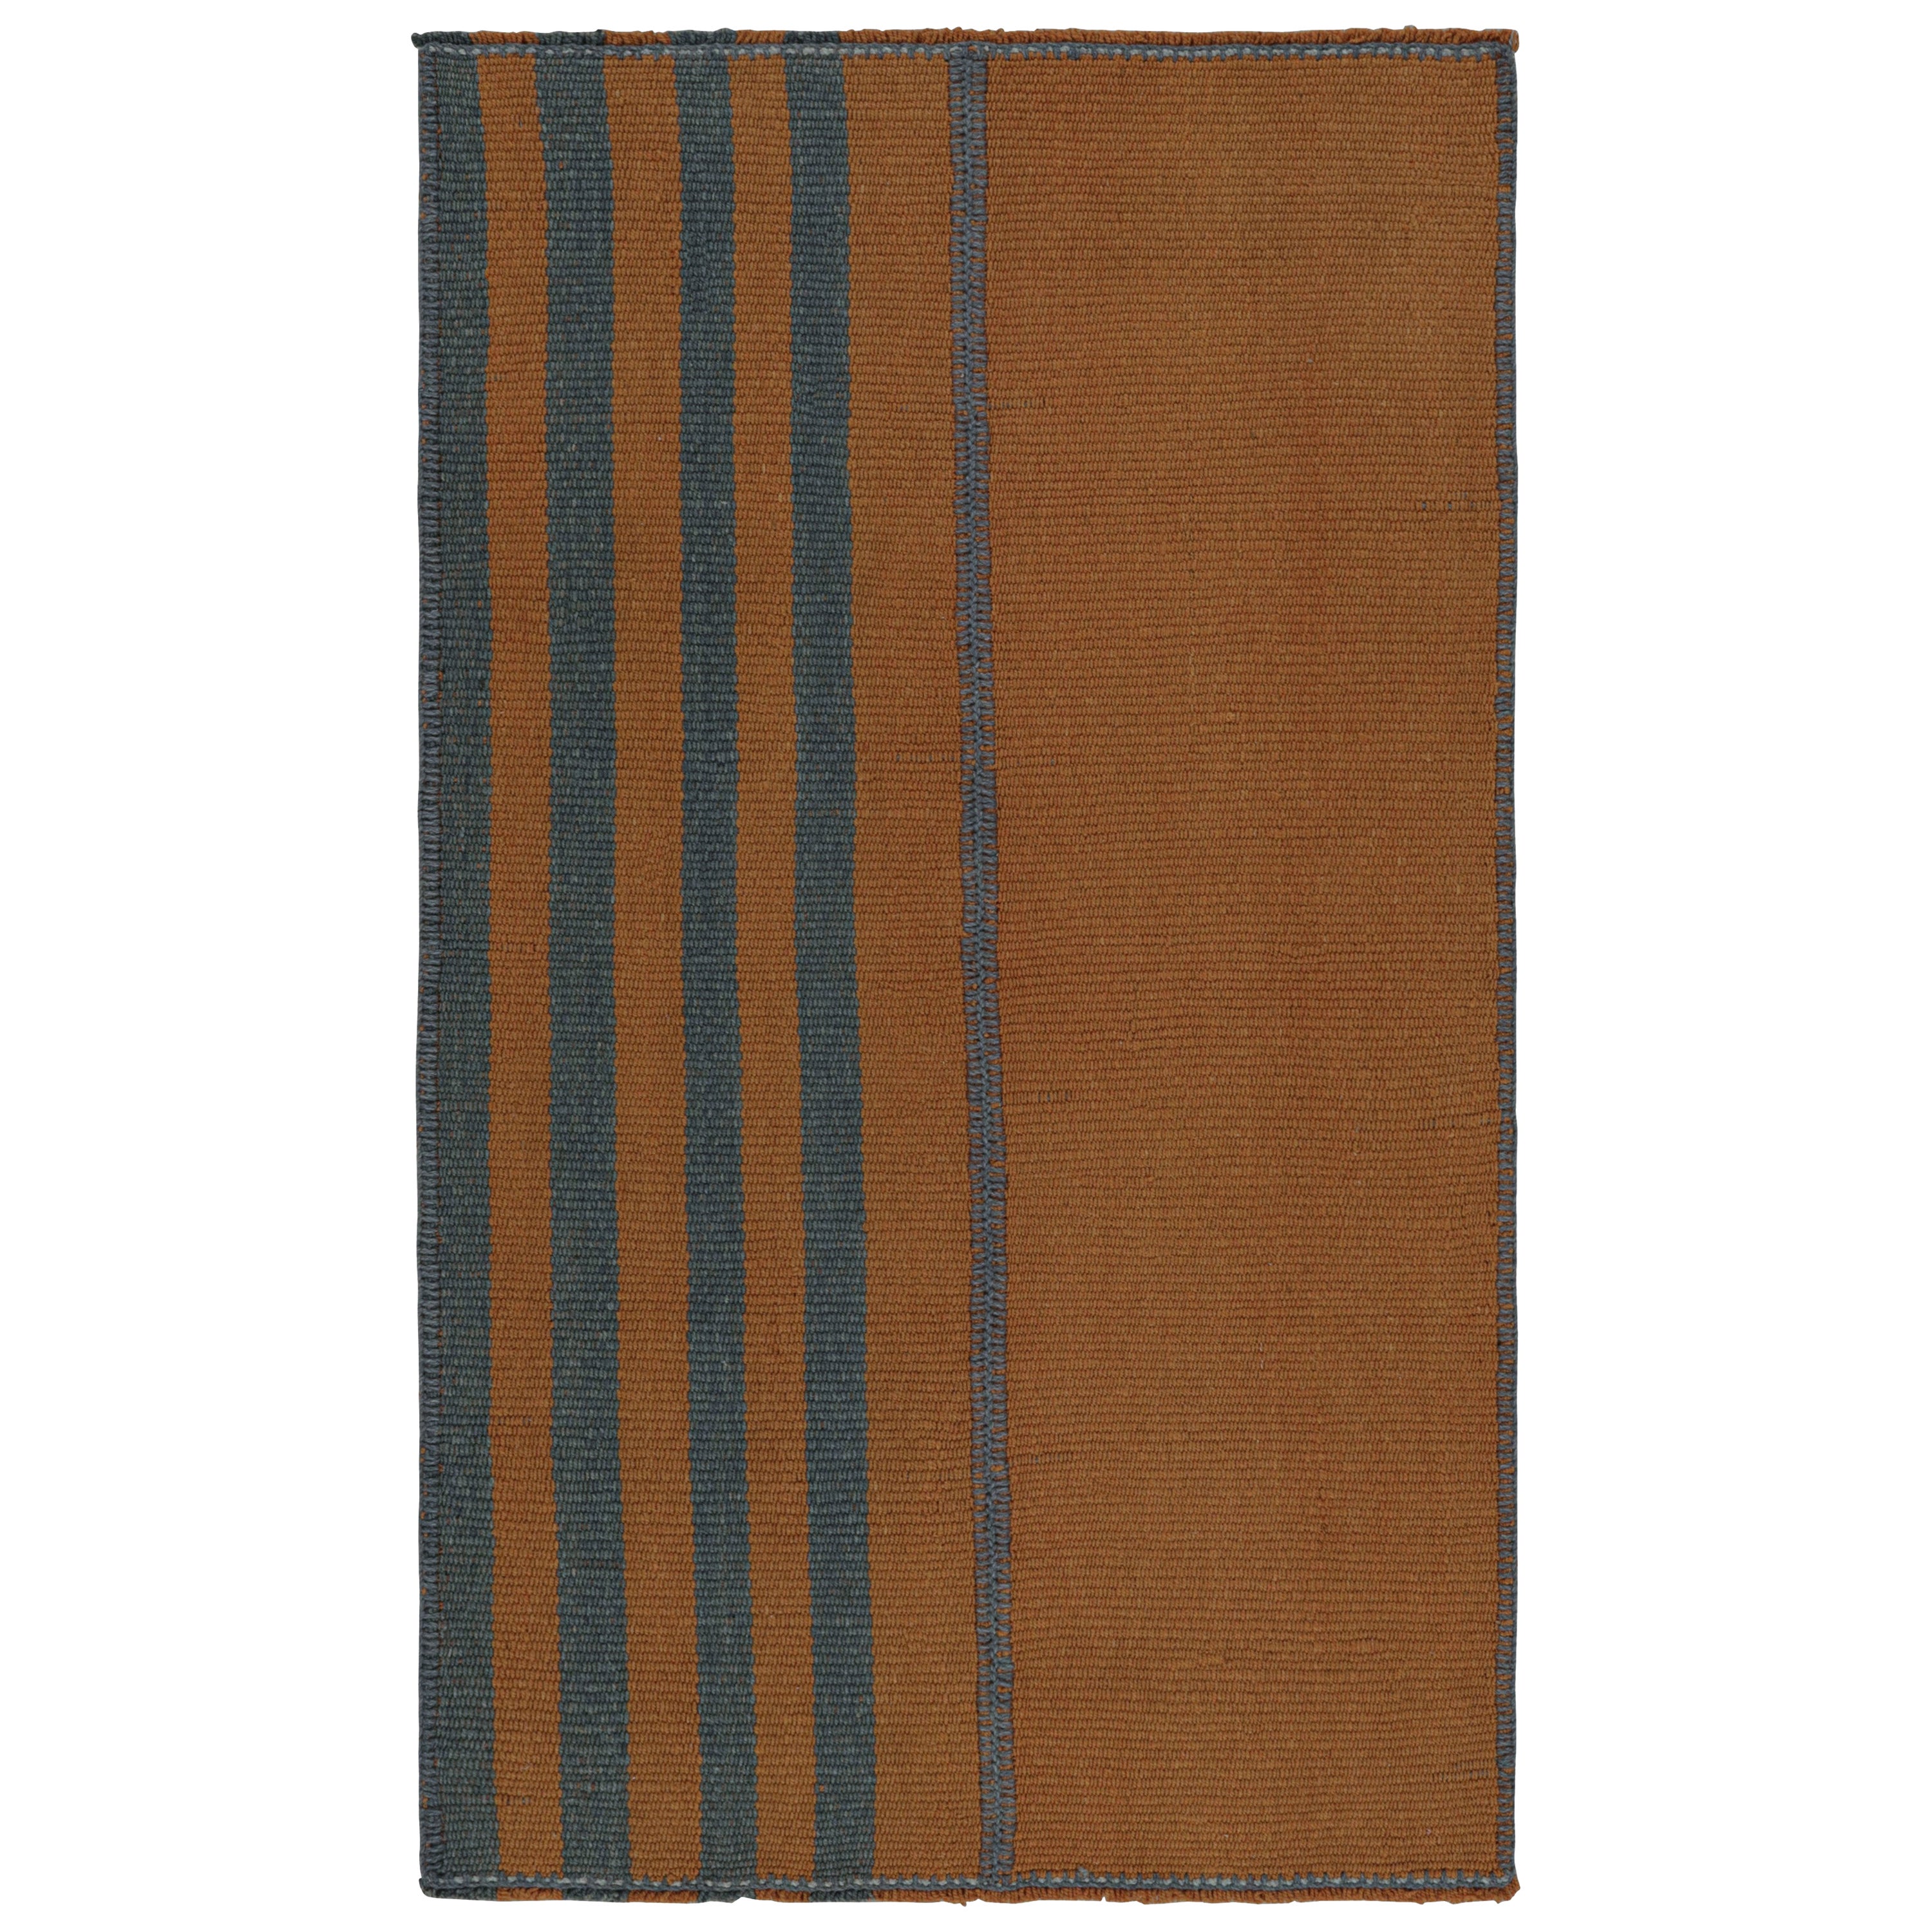 Rug & Kilim’s Contemporary Kilim Scatter Rug, In Orange And Blue Stripes For Sale